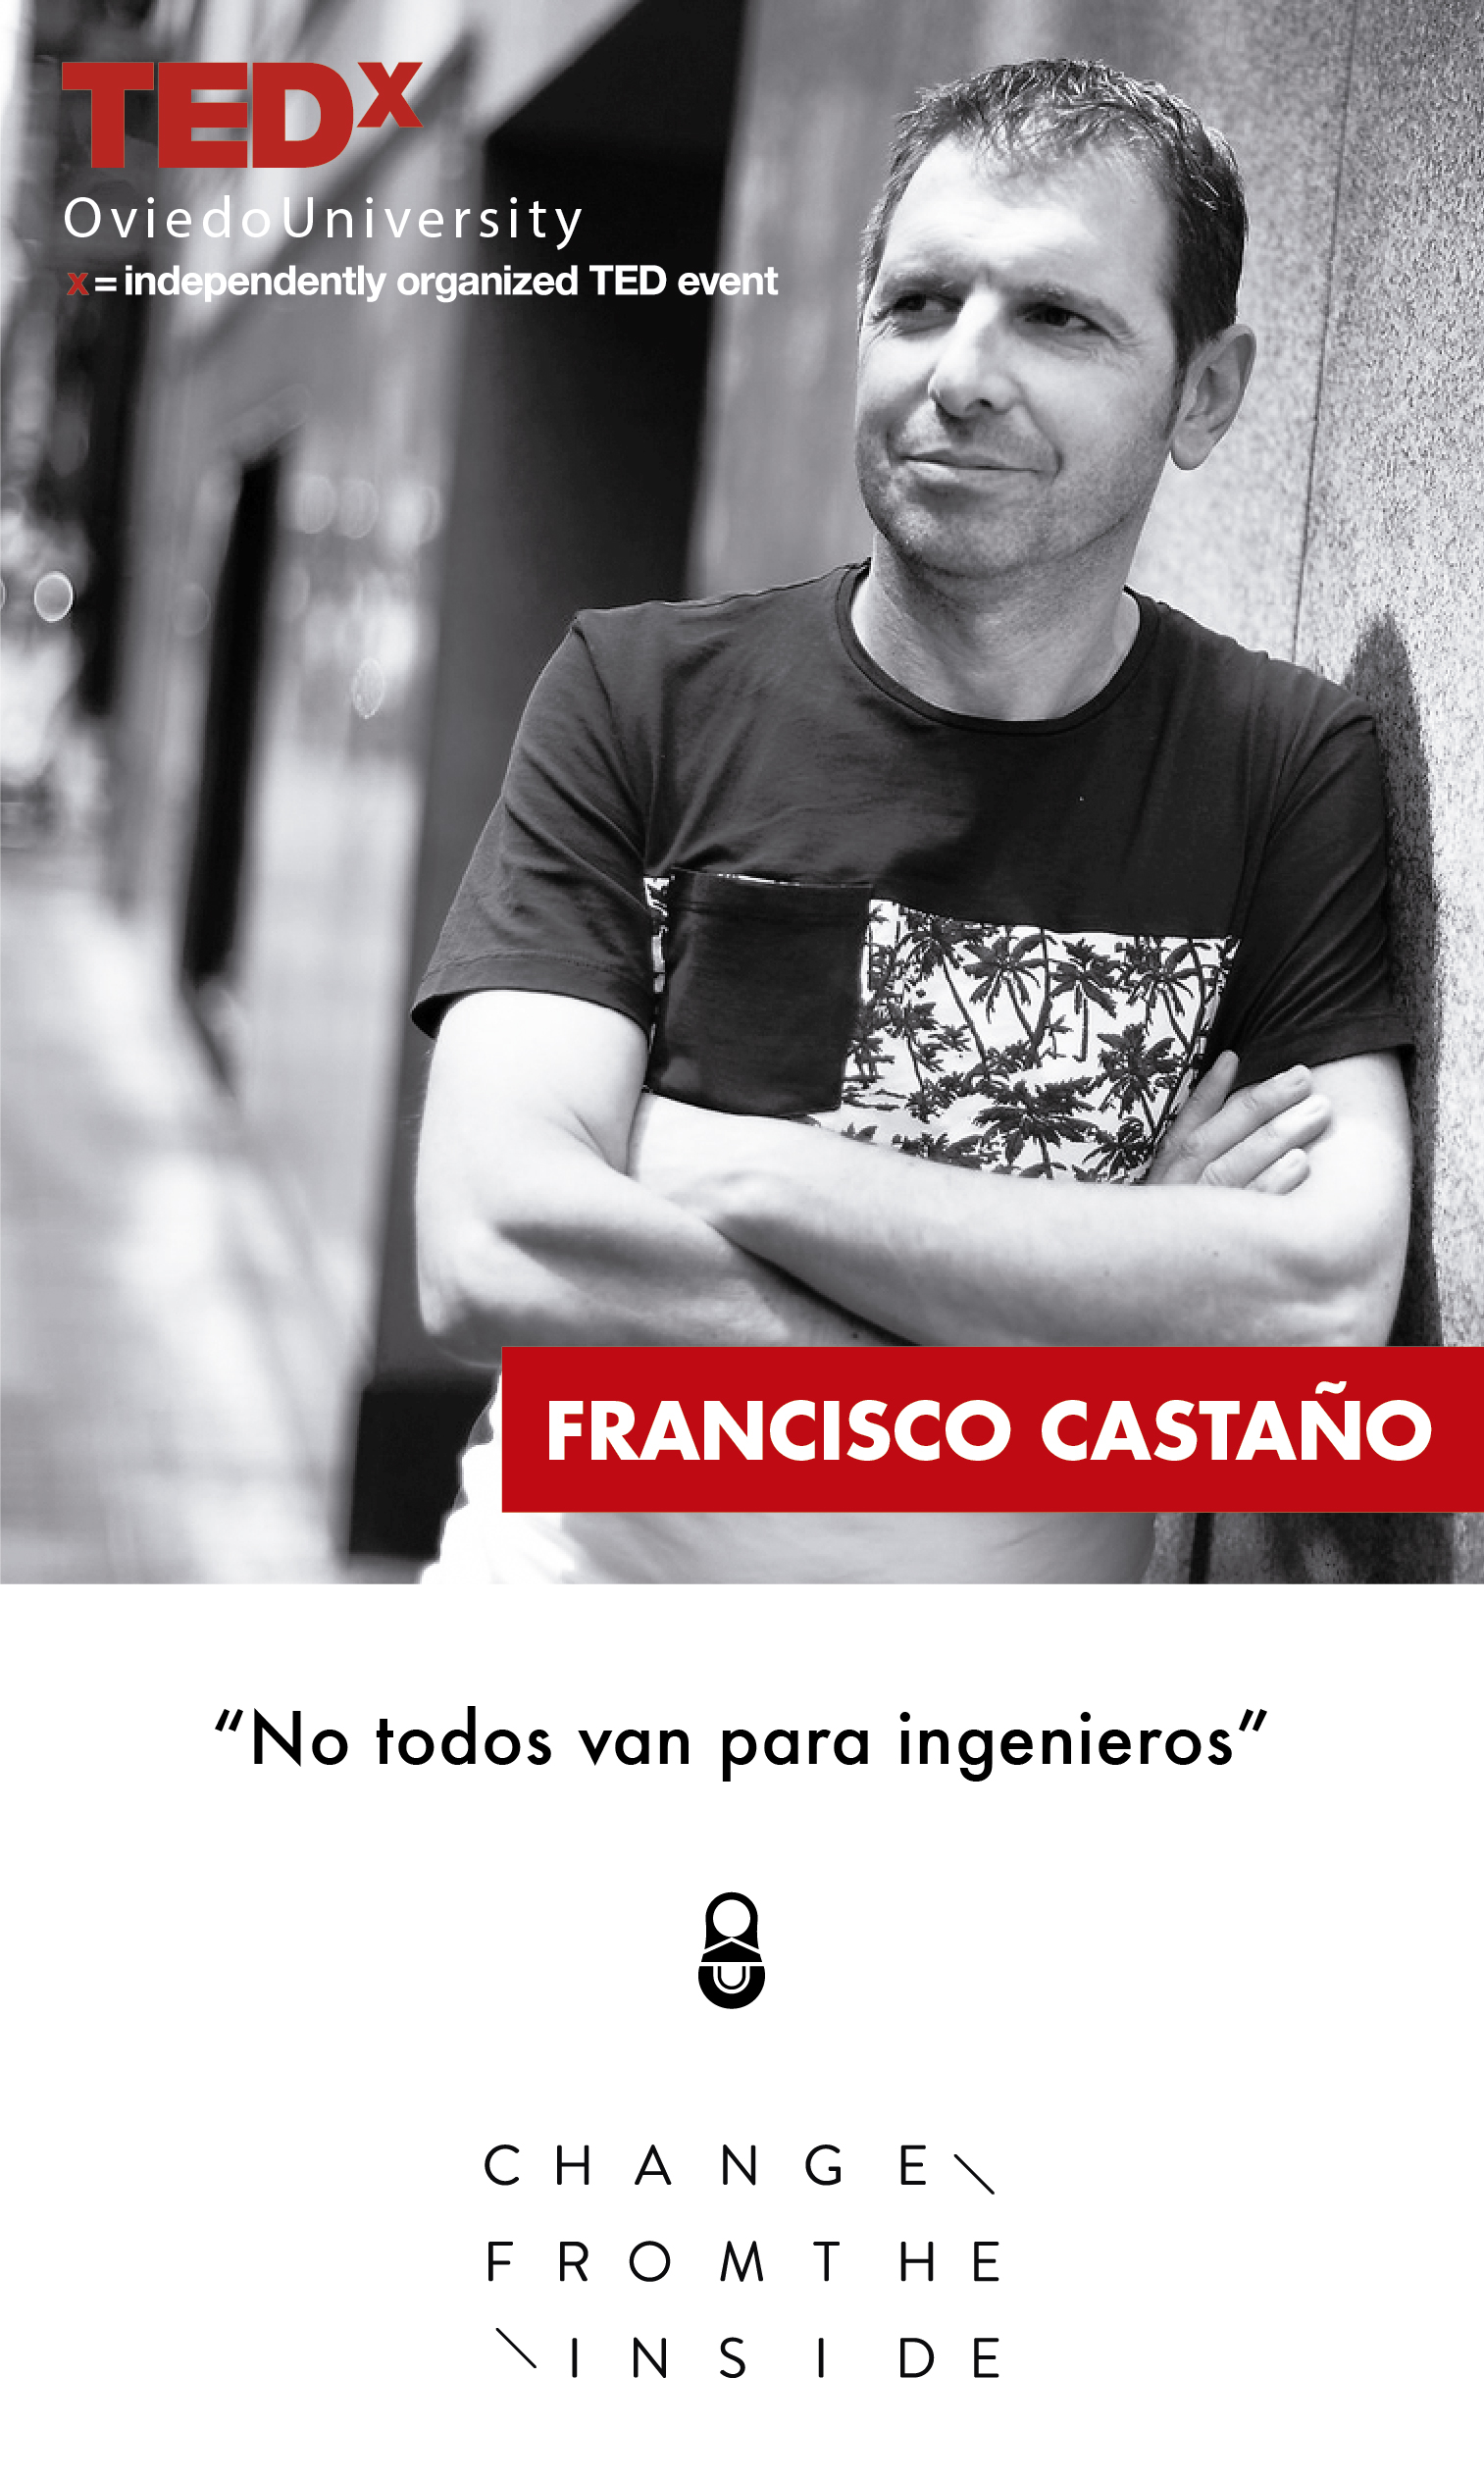 FRANCISCO CASTAÑO